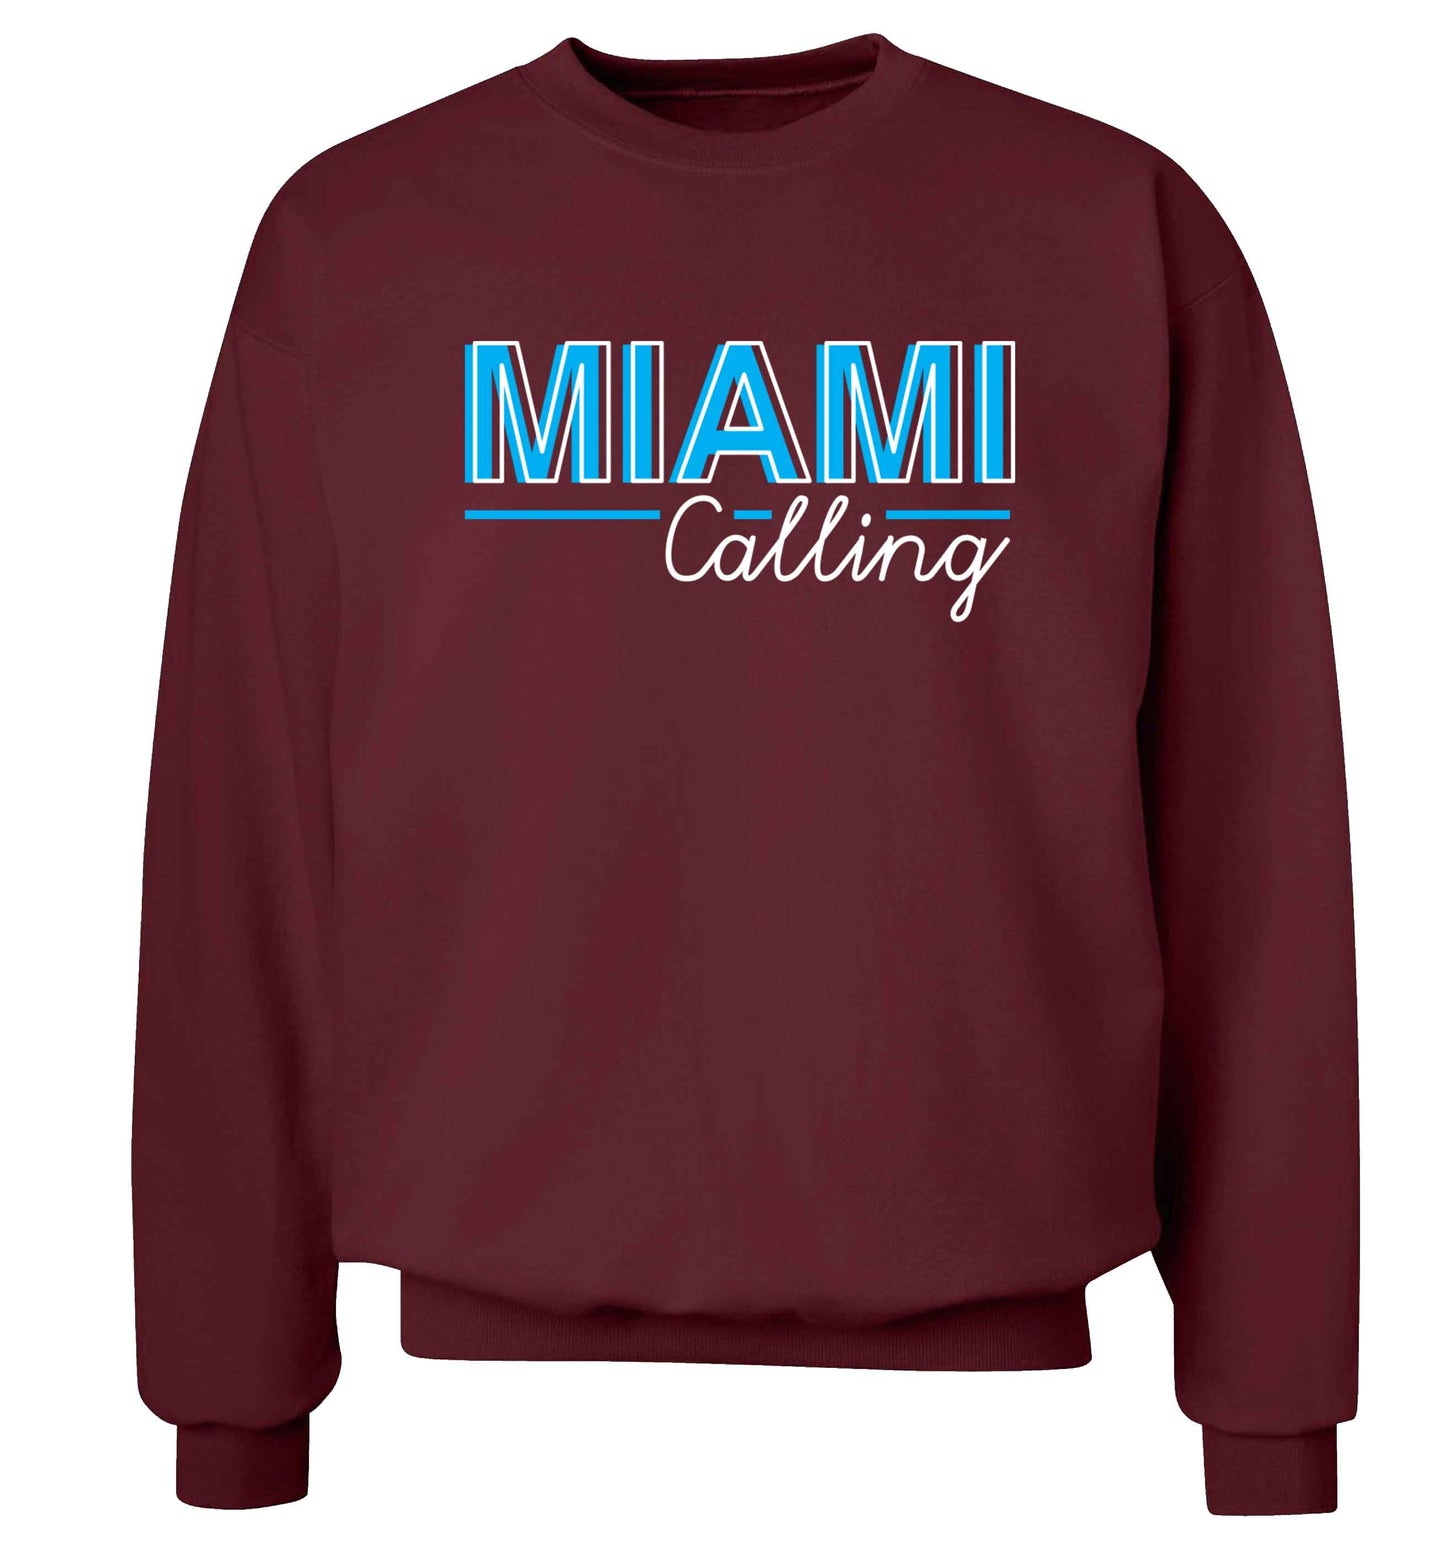 Miami calling Adult's unisex maroon Sweater 2XL